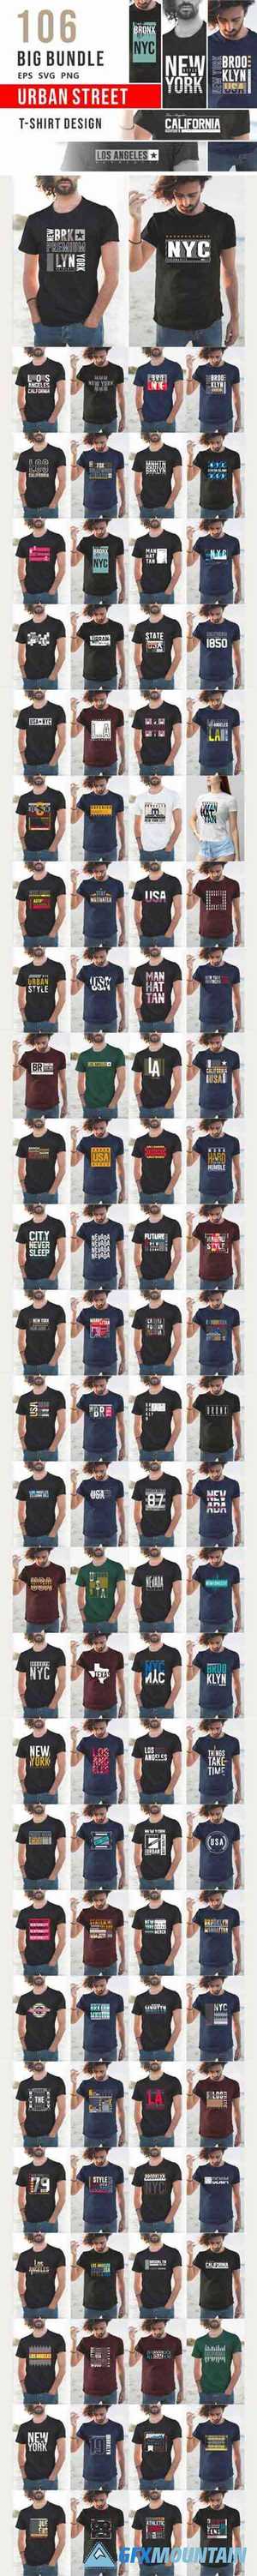 Urban Street T-shirt Design Bundle 6726832